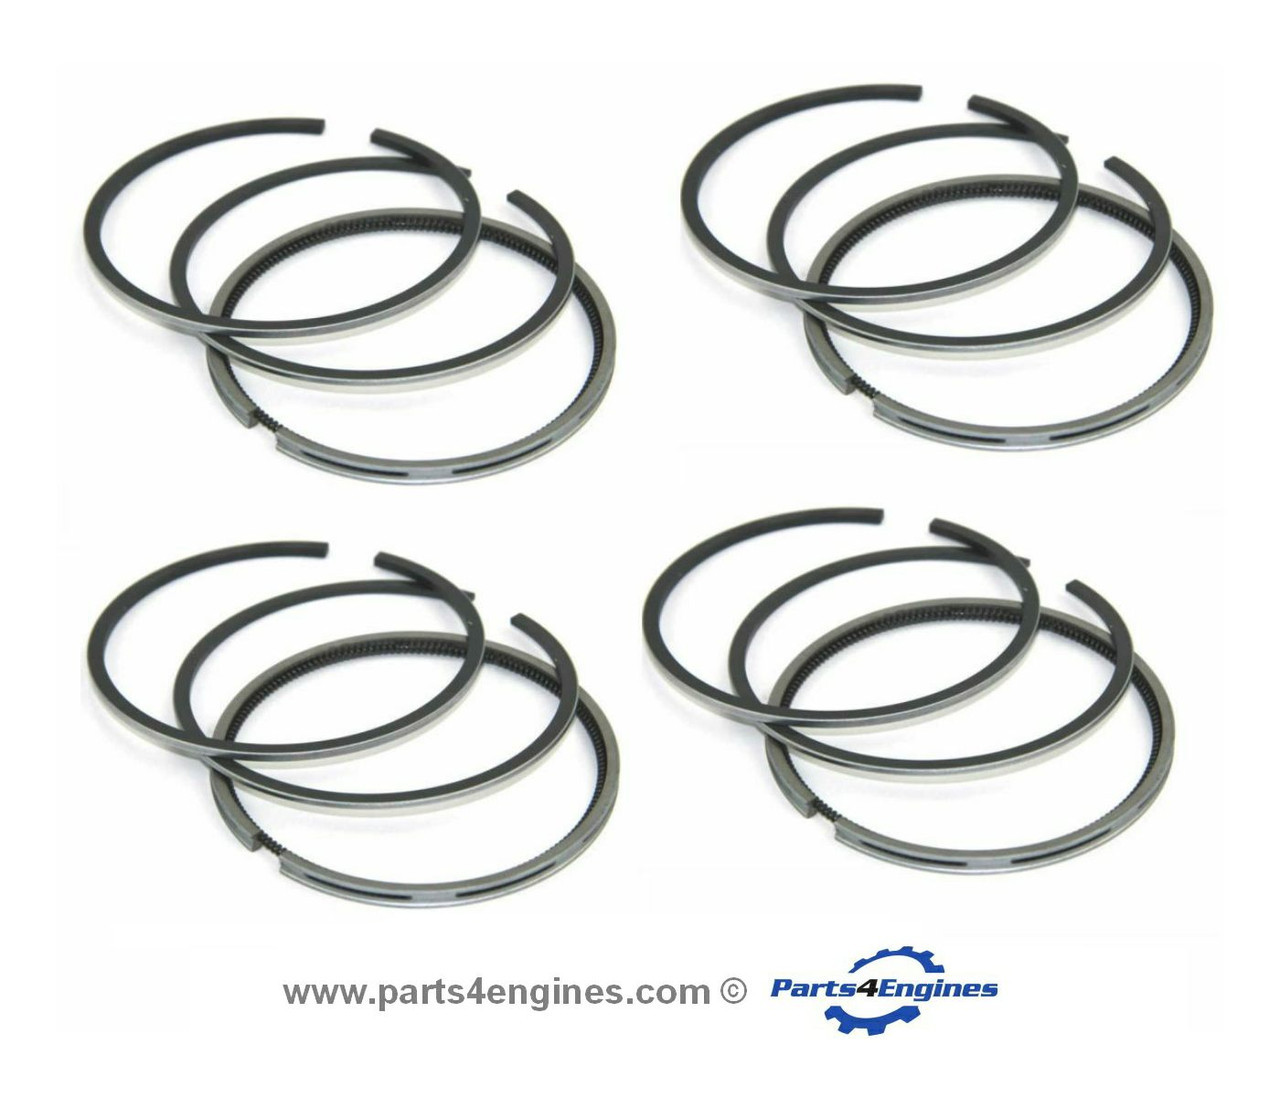 Piston Rings, STD-100800